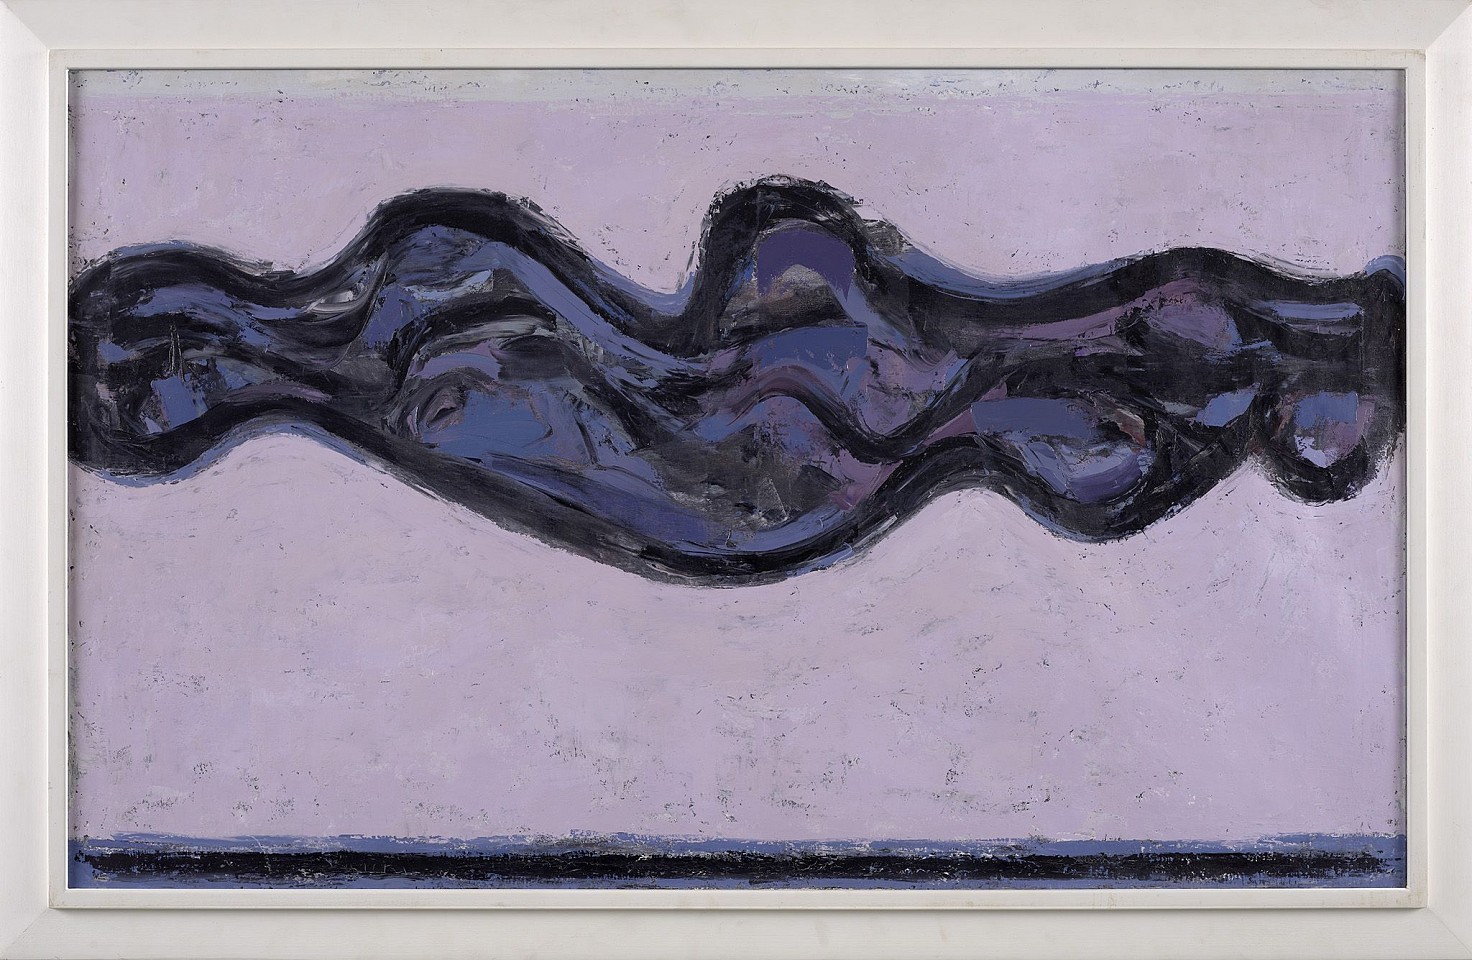 Raymond Hendler, Nude Superior (No.8), 1957
Oil on canvas, 29 x 47 in. (73.7 x 119.4 cm)
HEN-00017